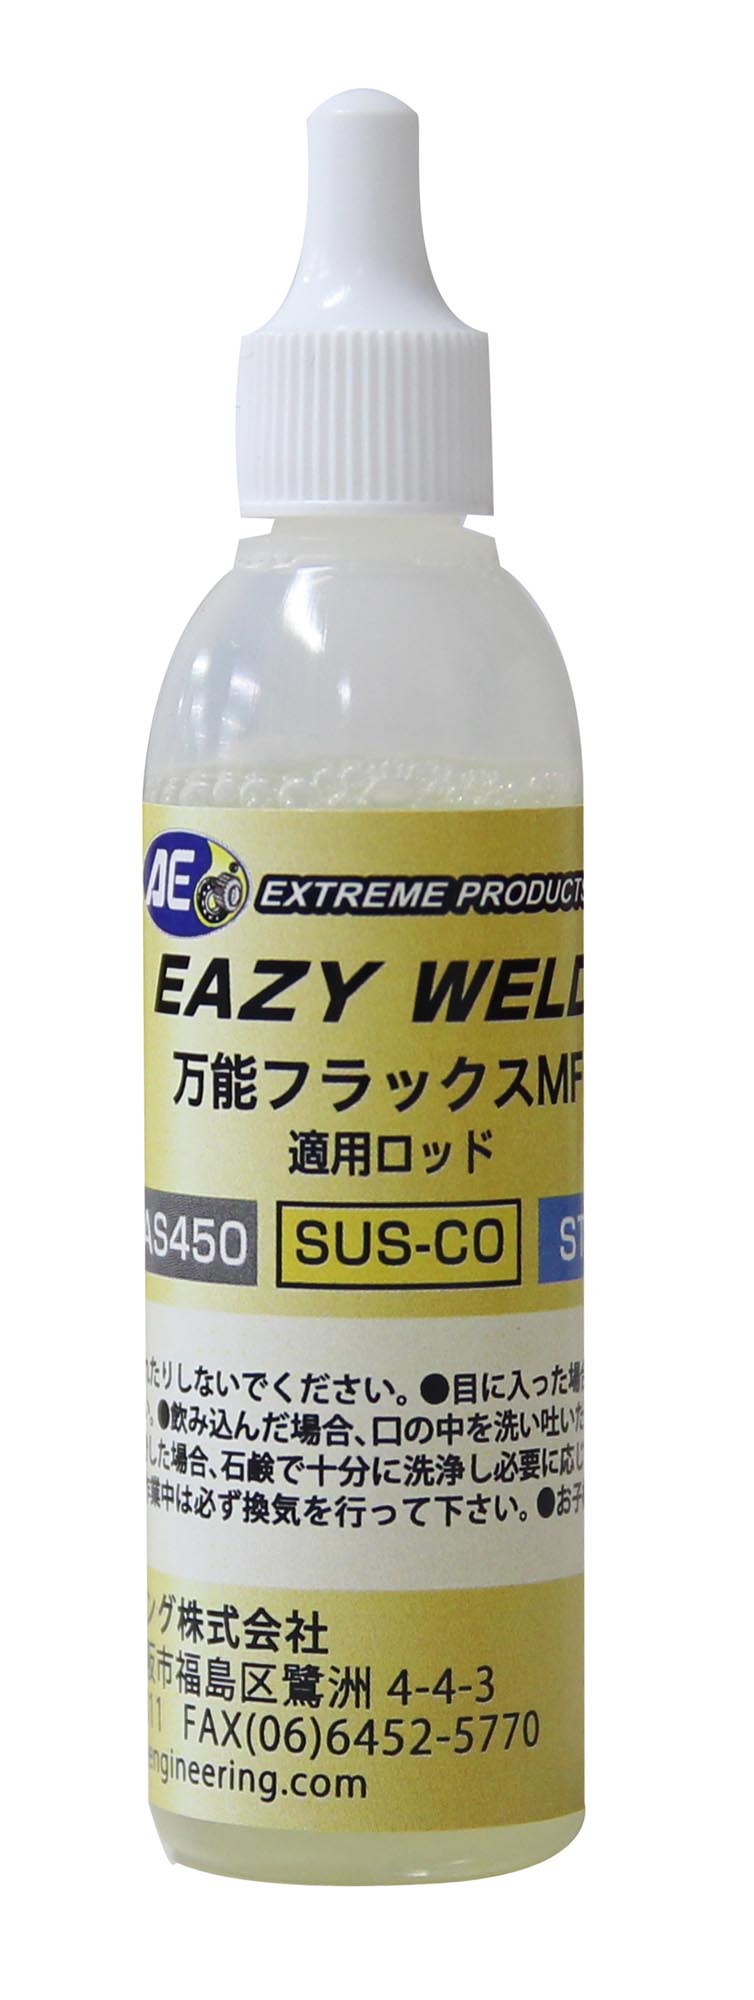 ASAHI/旭エンジニアリング EASY WELD 簡単溶接キット アルミ用キット